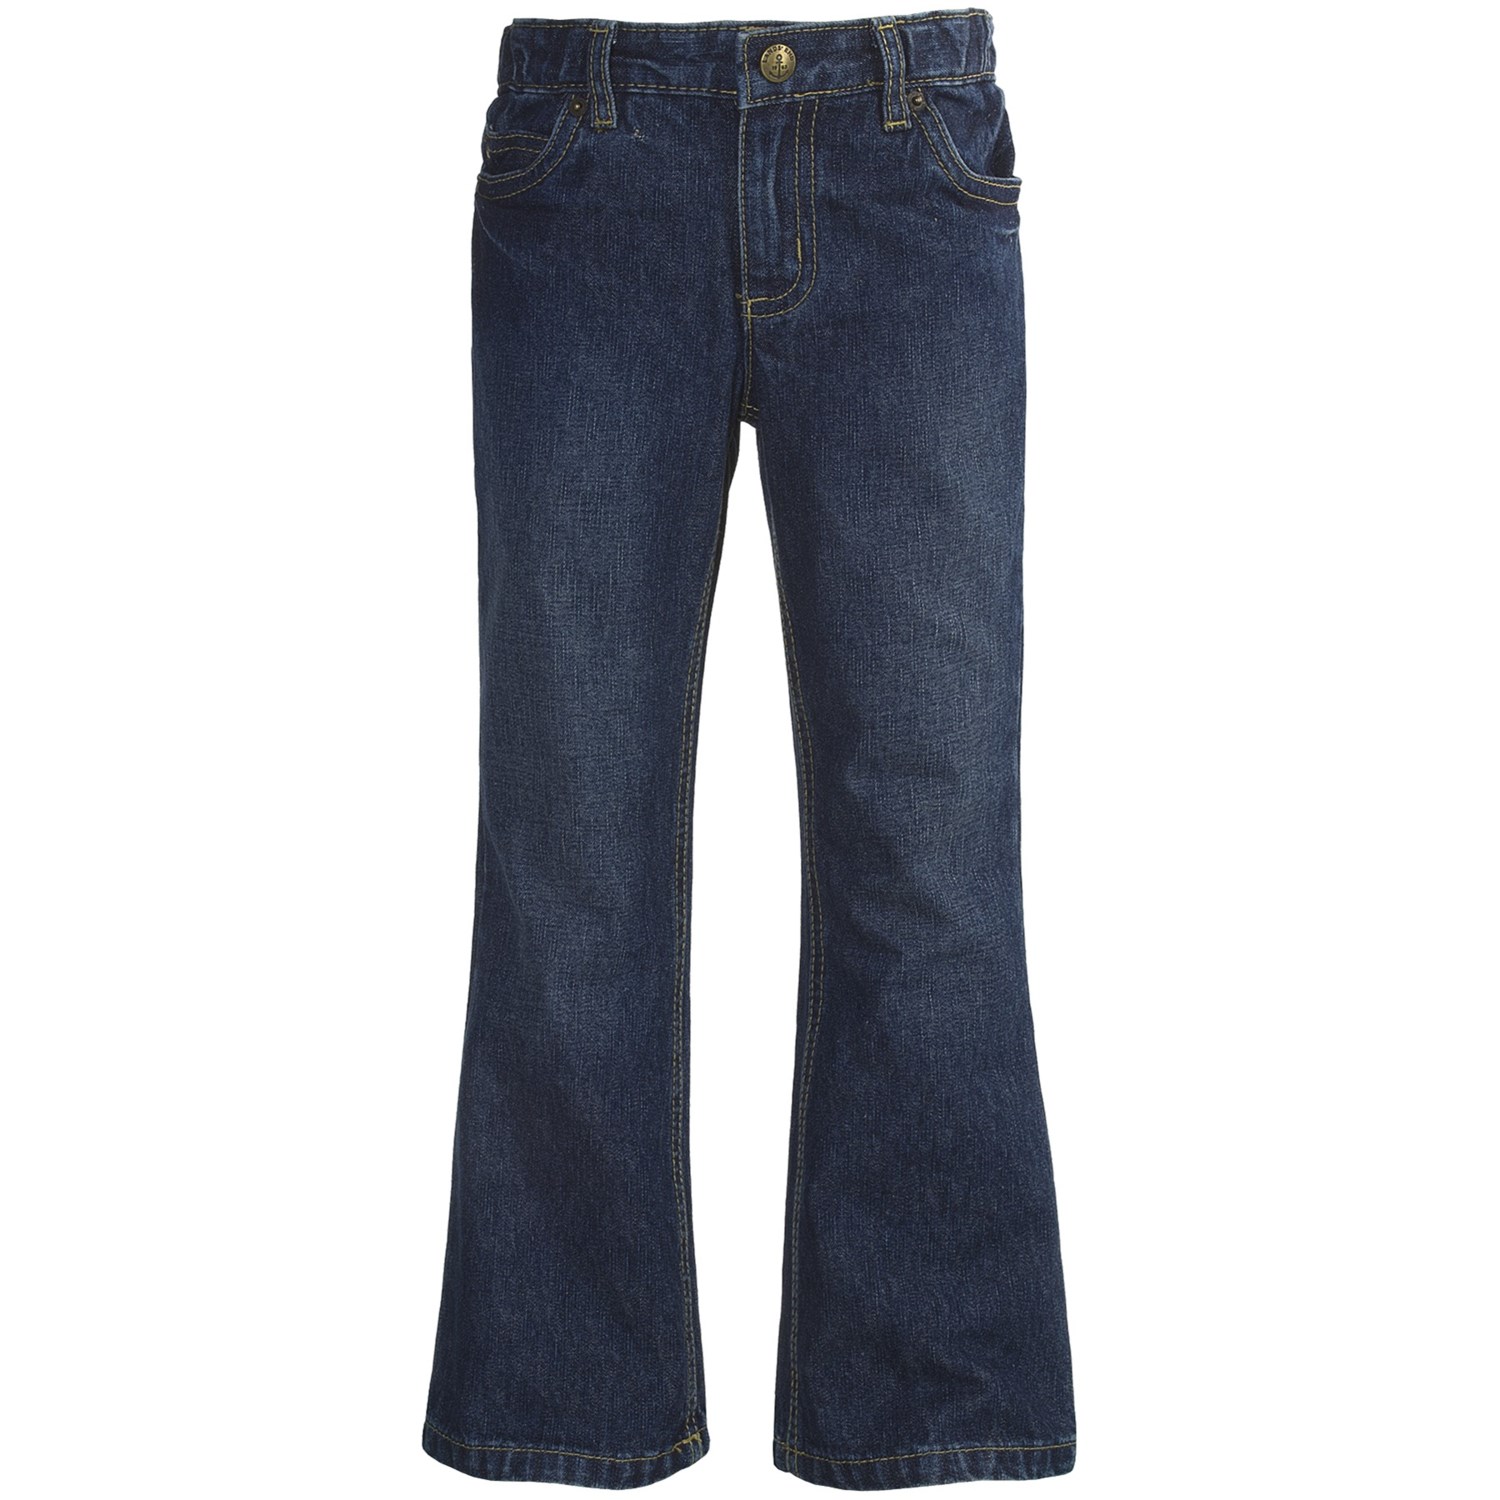 Classic Denim Elastic-Waist Jeans (For Boys) 5830V - Save 61%